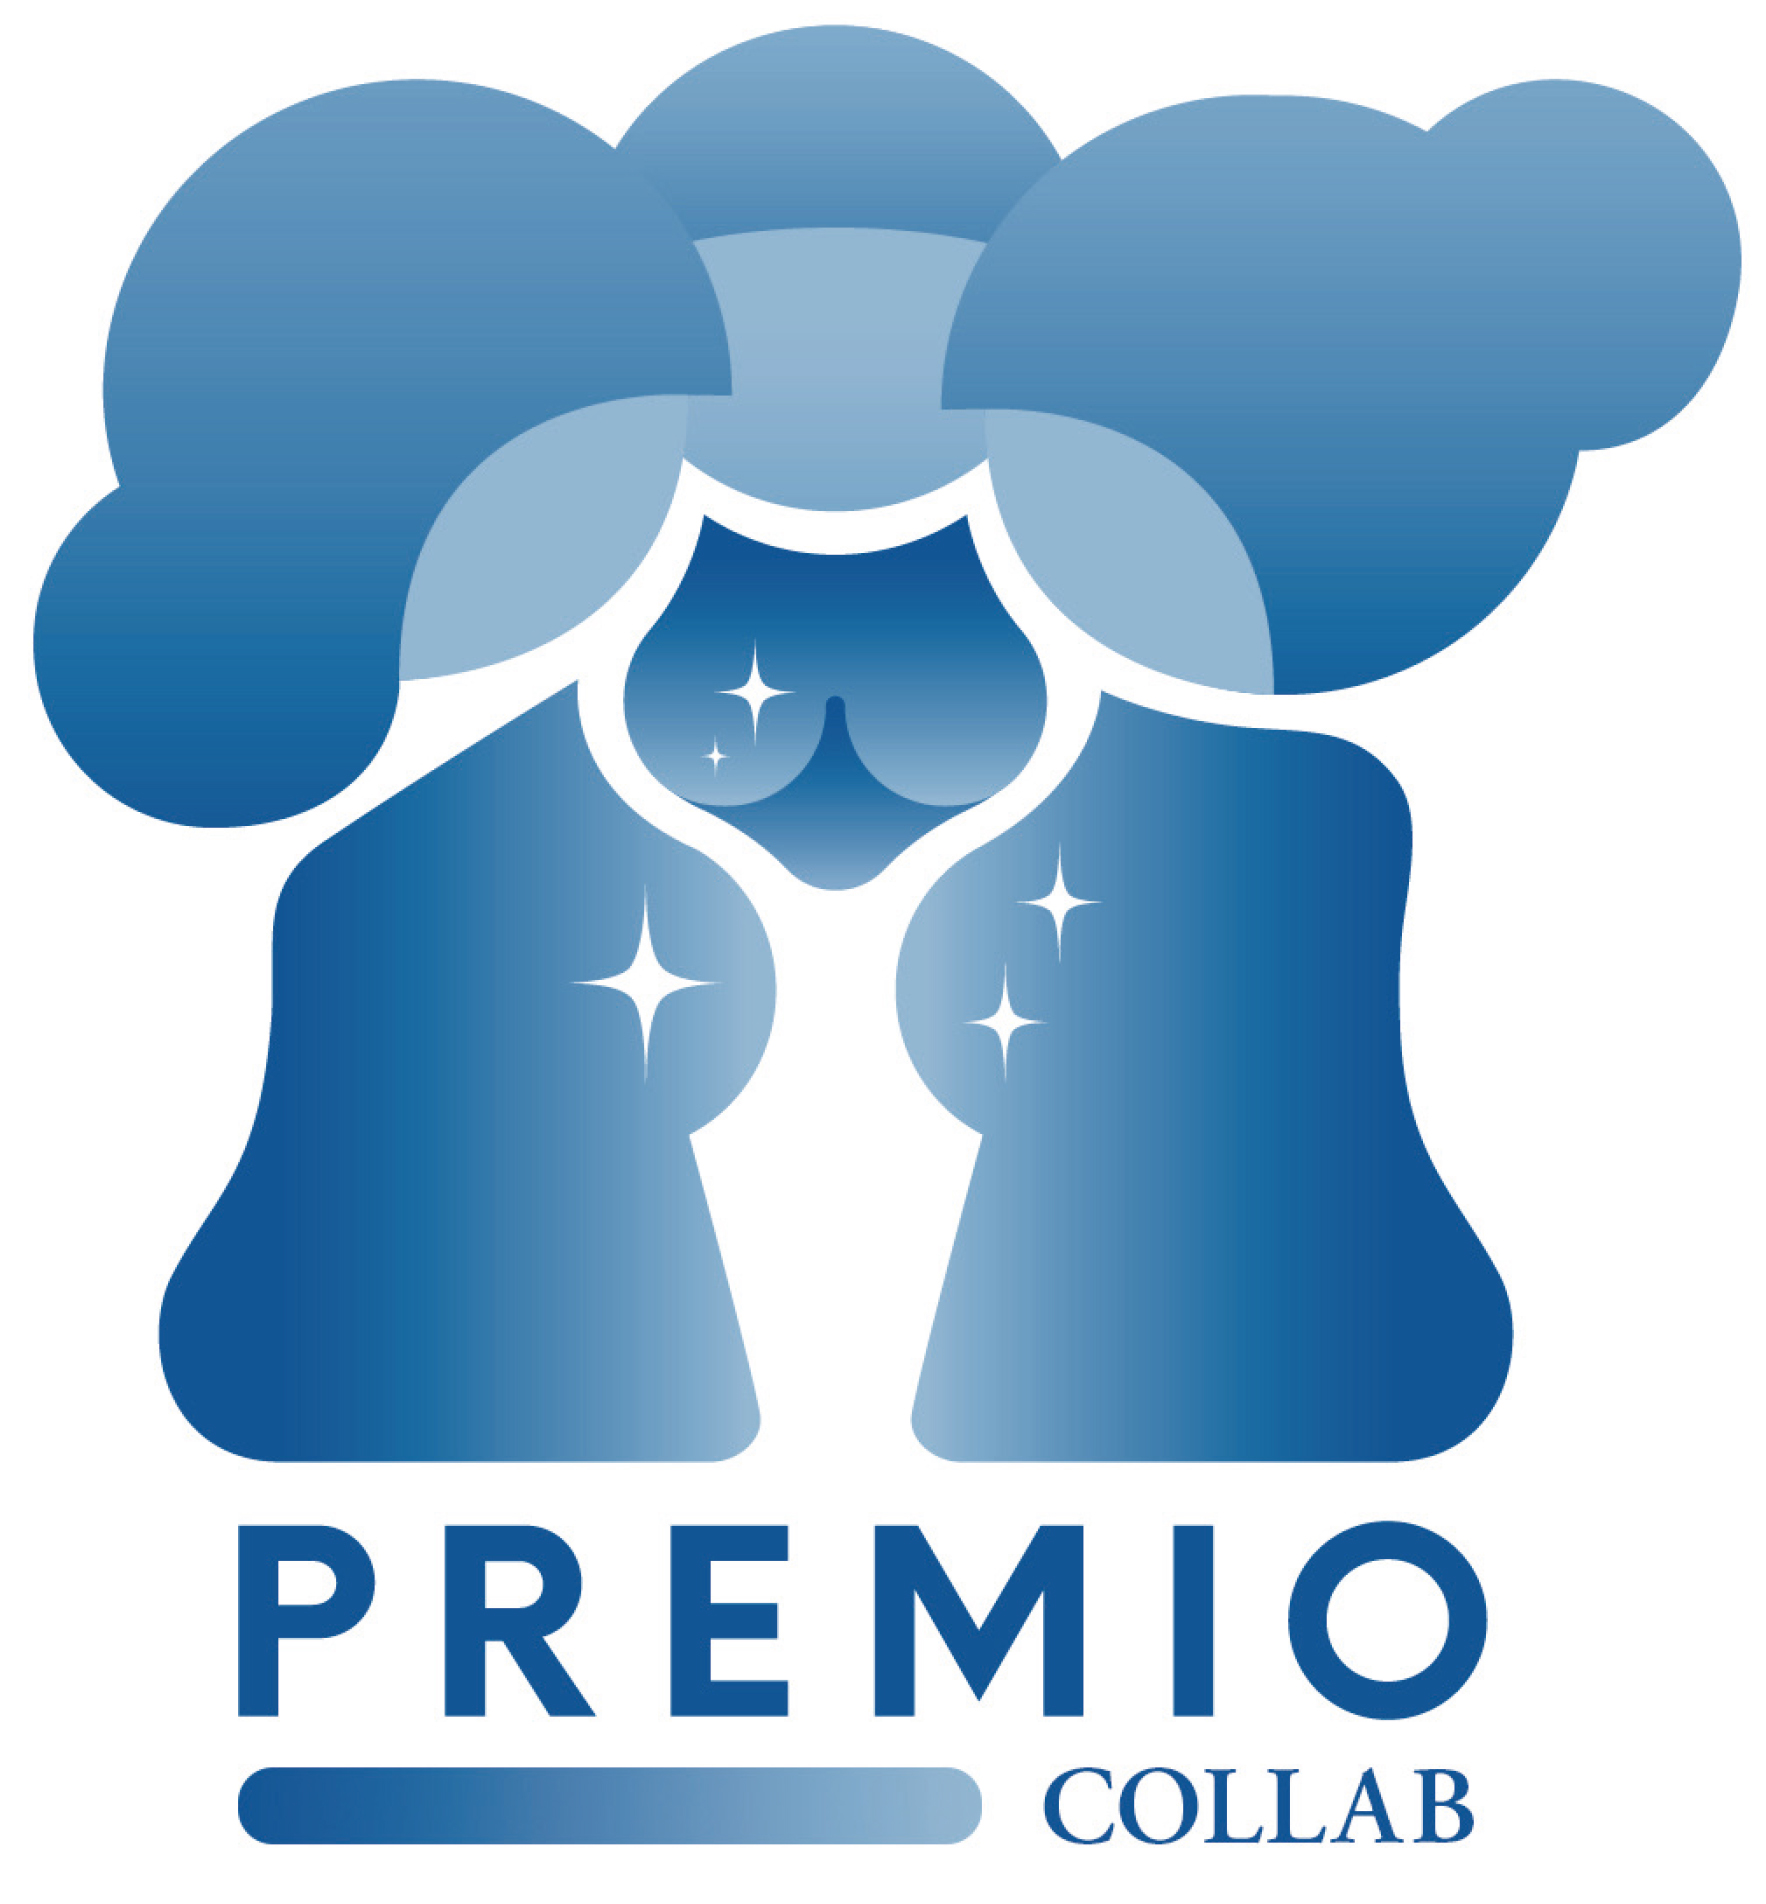 PREMIO COLLAB